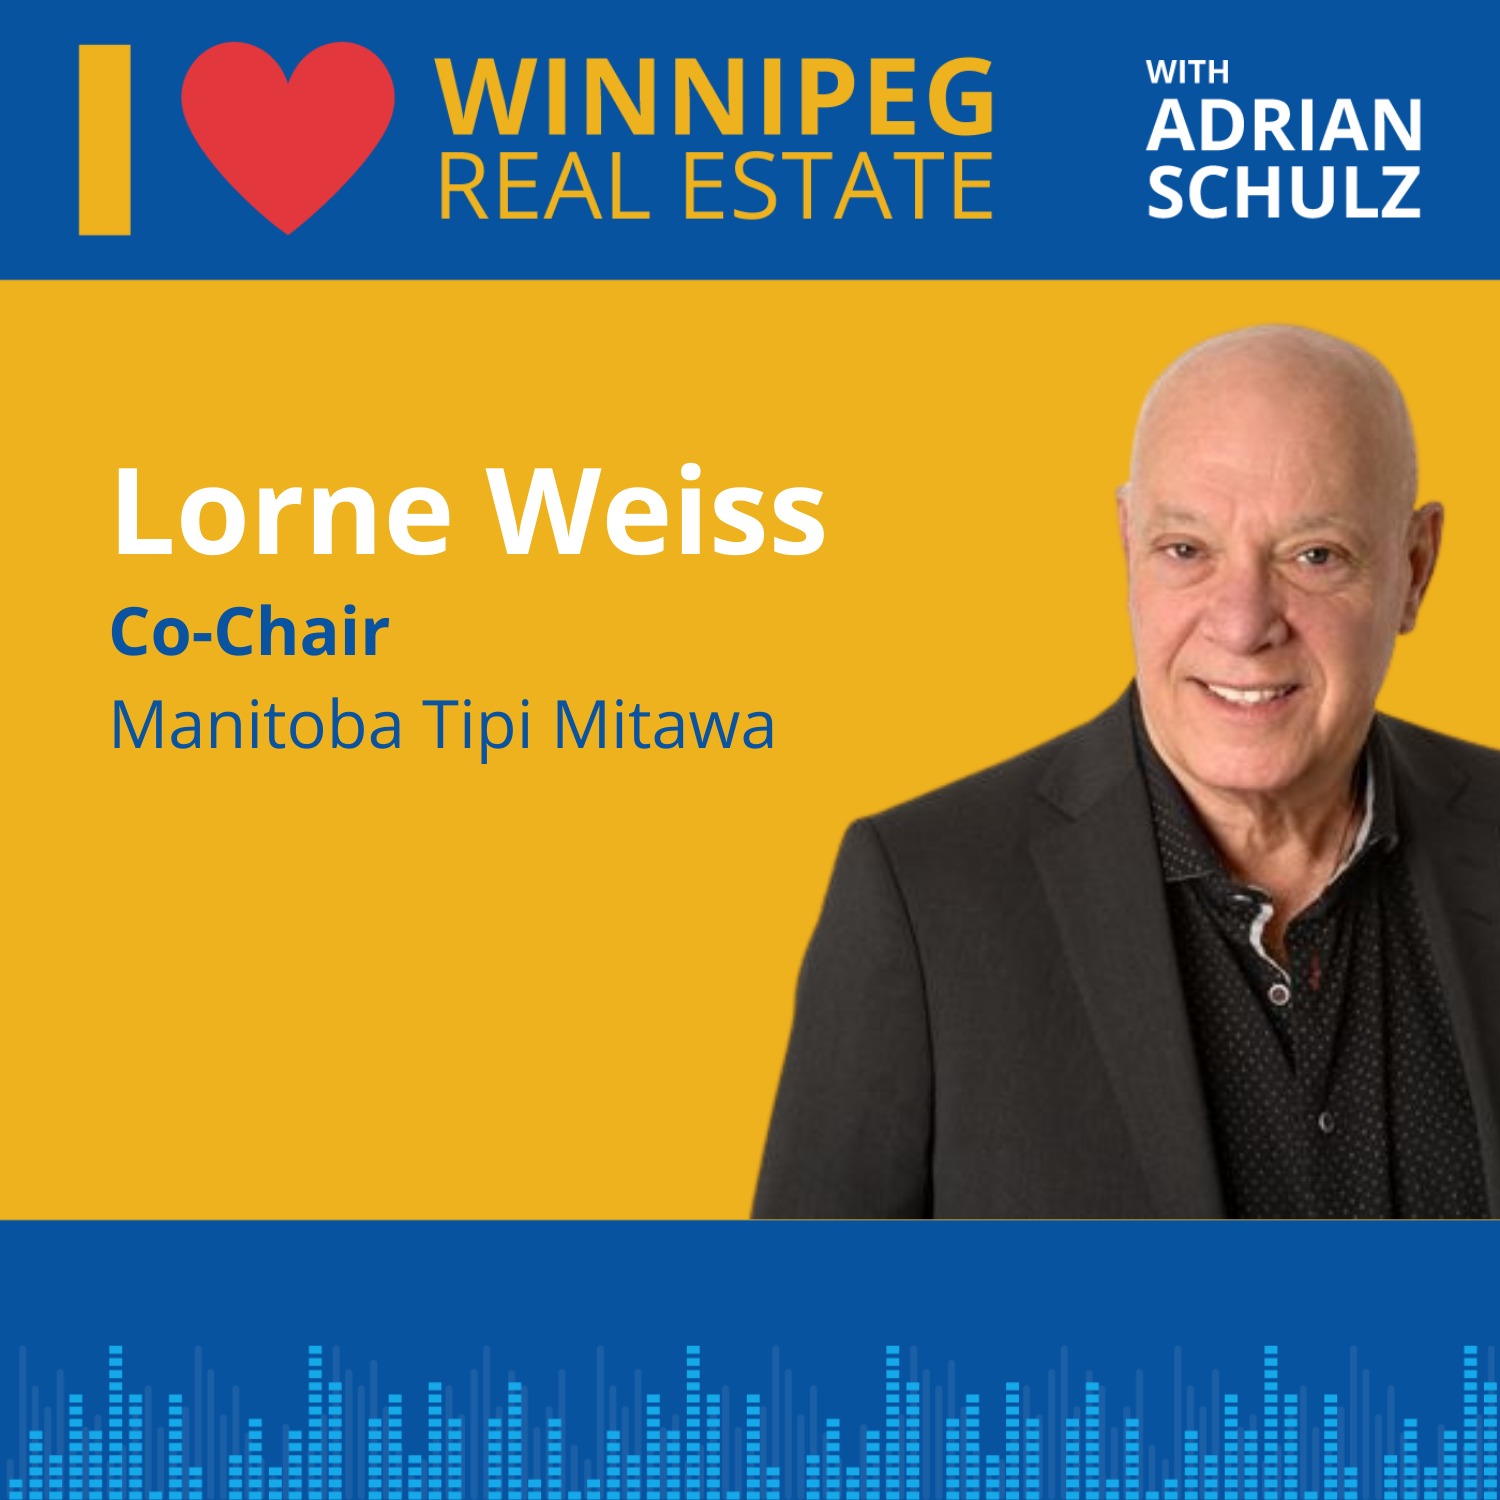 Lorne Weiss on the Manitoba Tipi Mitawa housing program